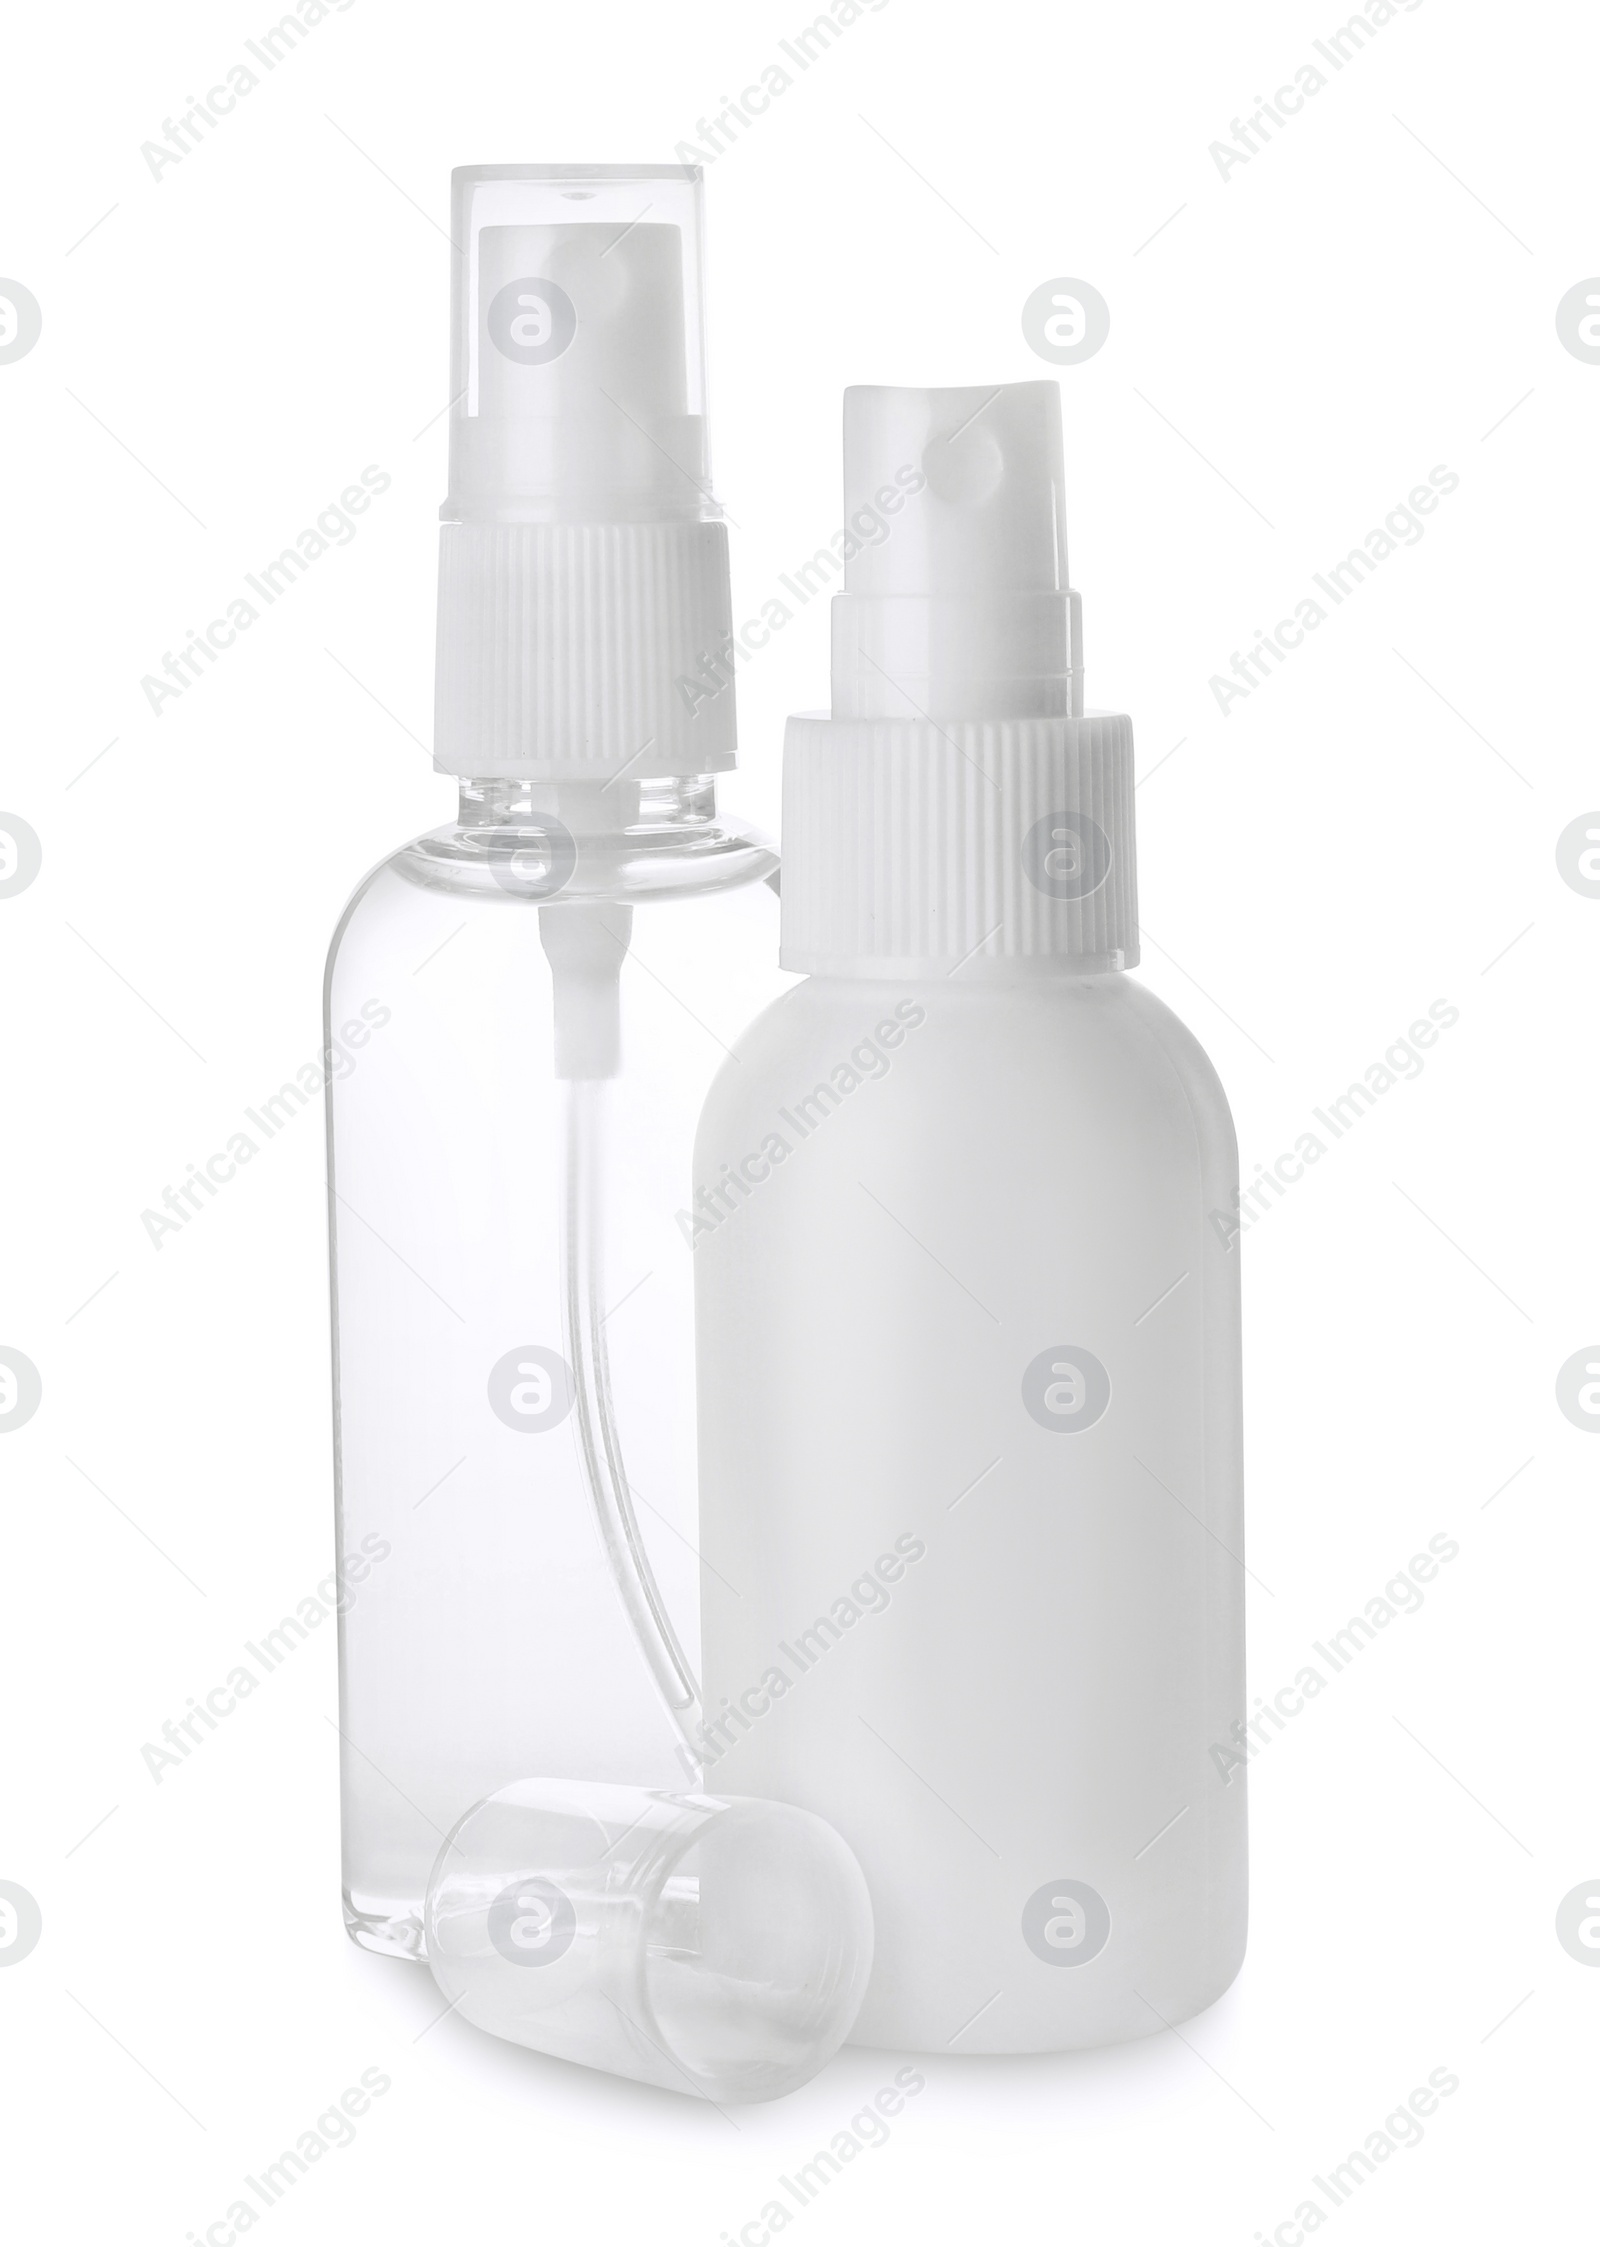 Photo of Spray bottles with antiseptic on white background